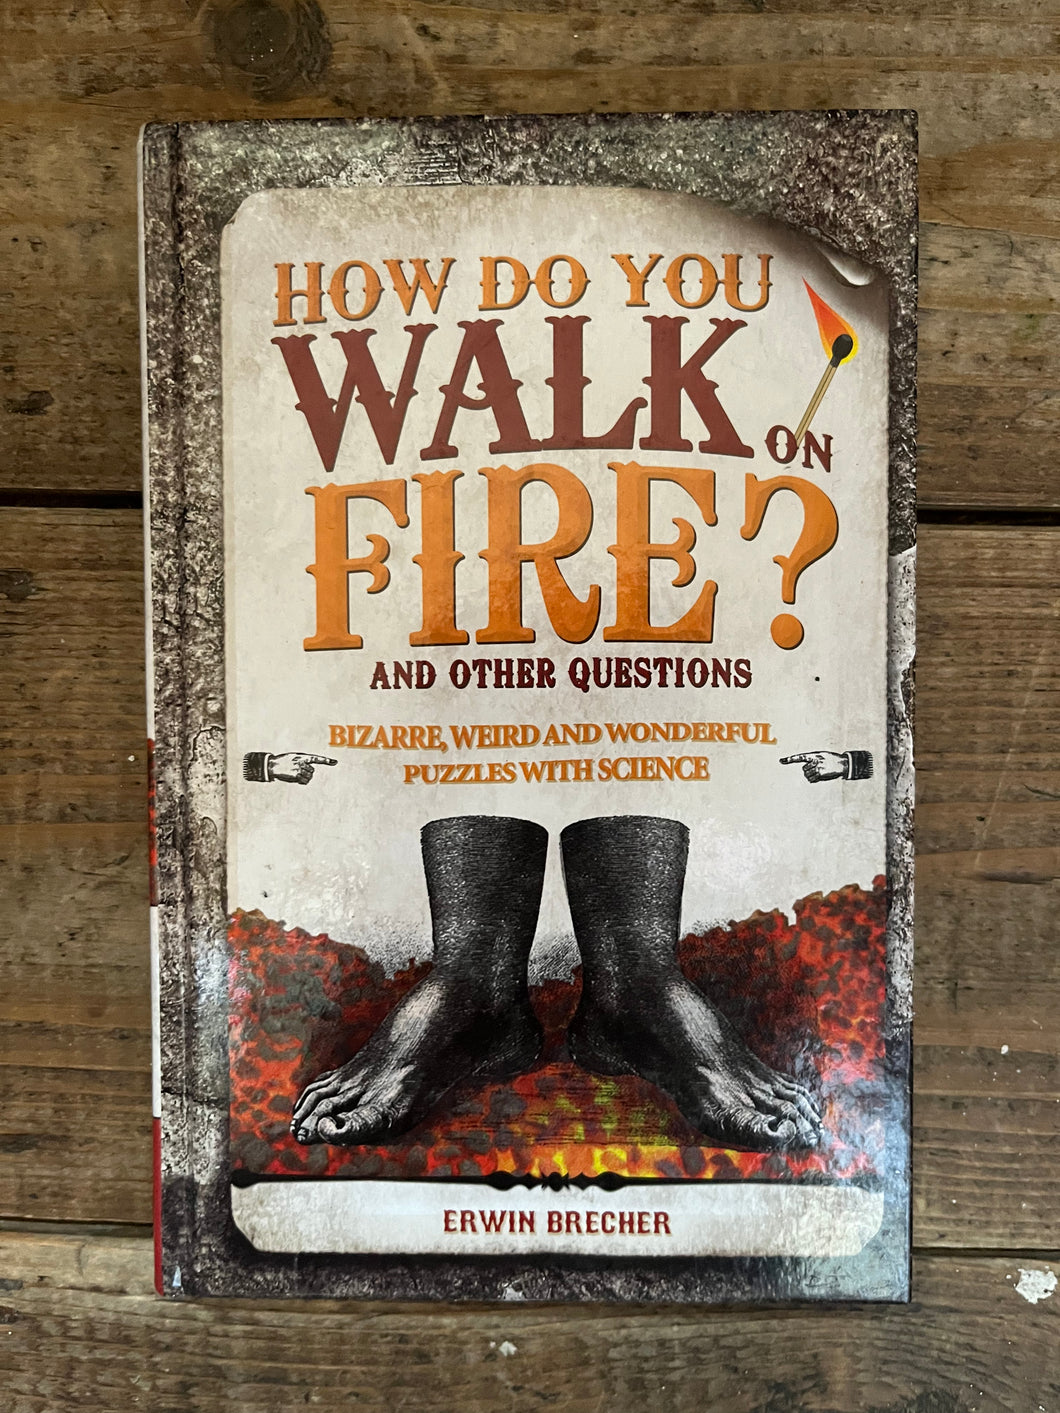 How do you Walk on Fire ? by Erwin Brecher